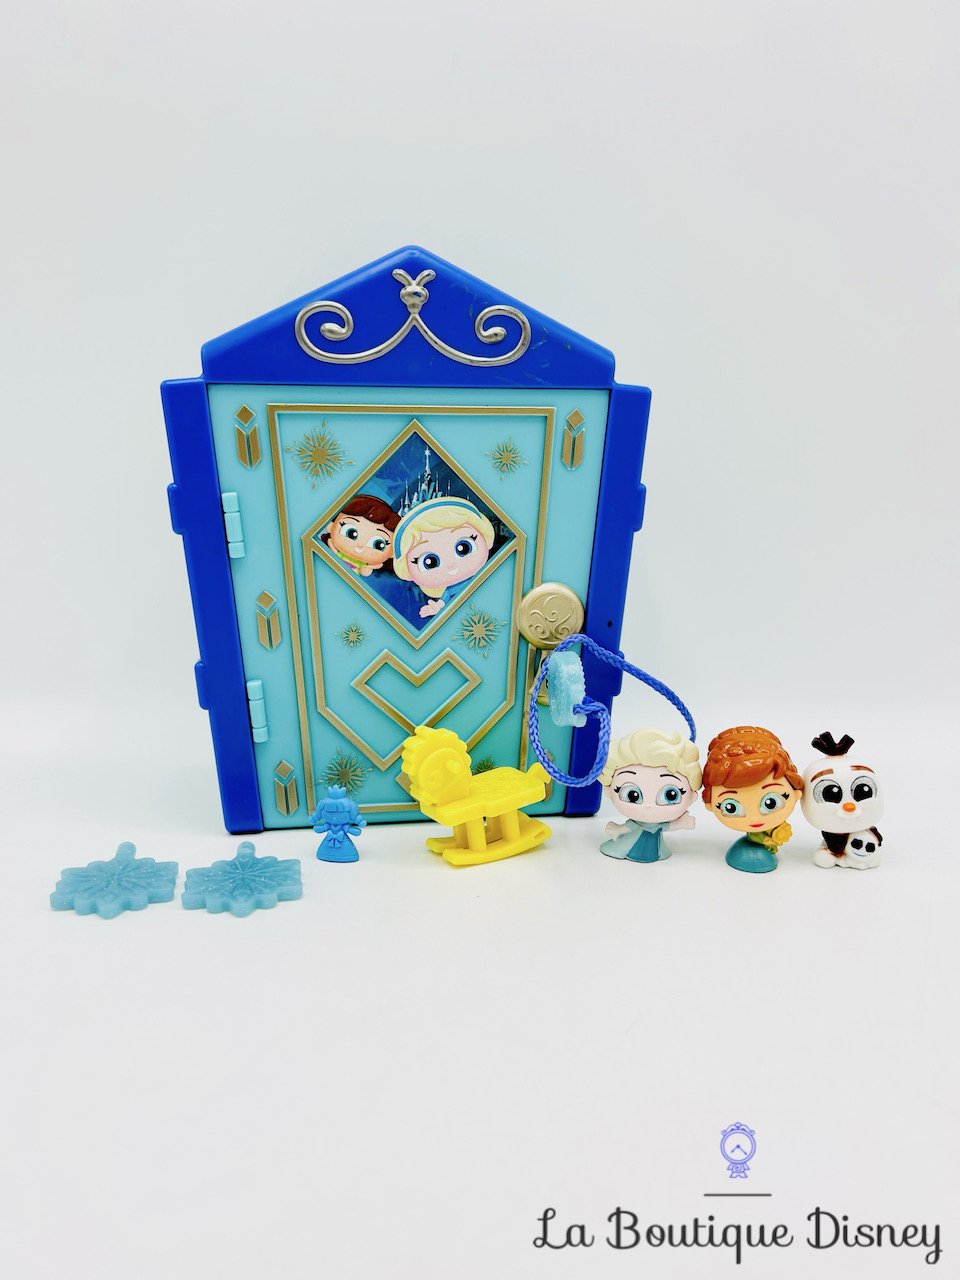 Disney Doorables - Disney Stitch Collection Peek Coffret 8 Figurines